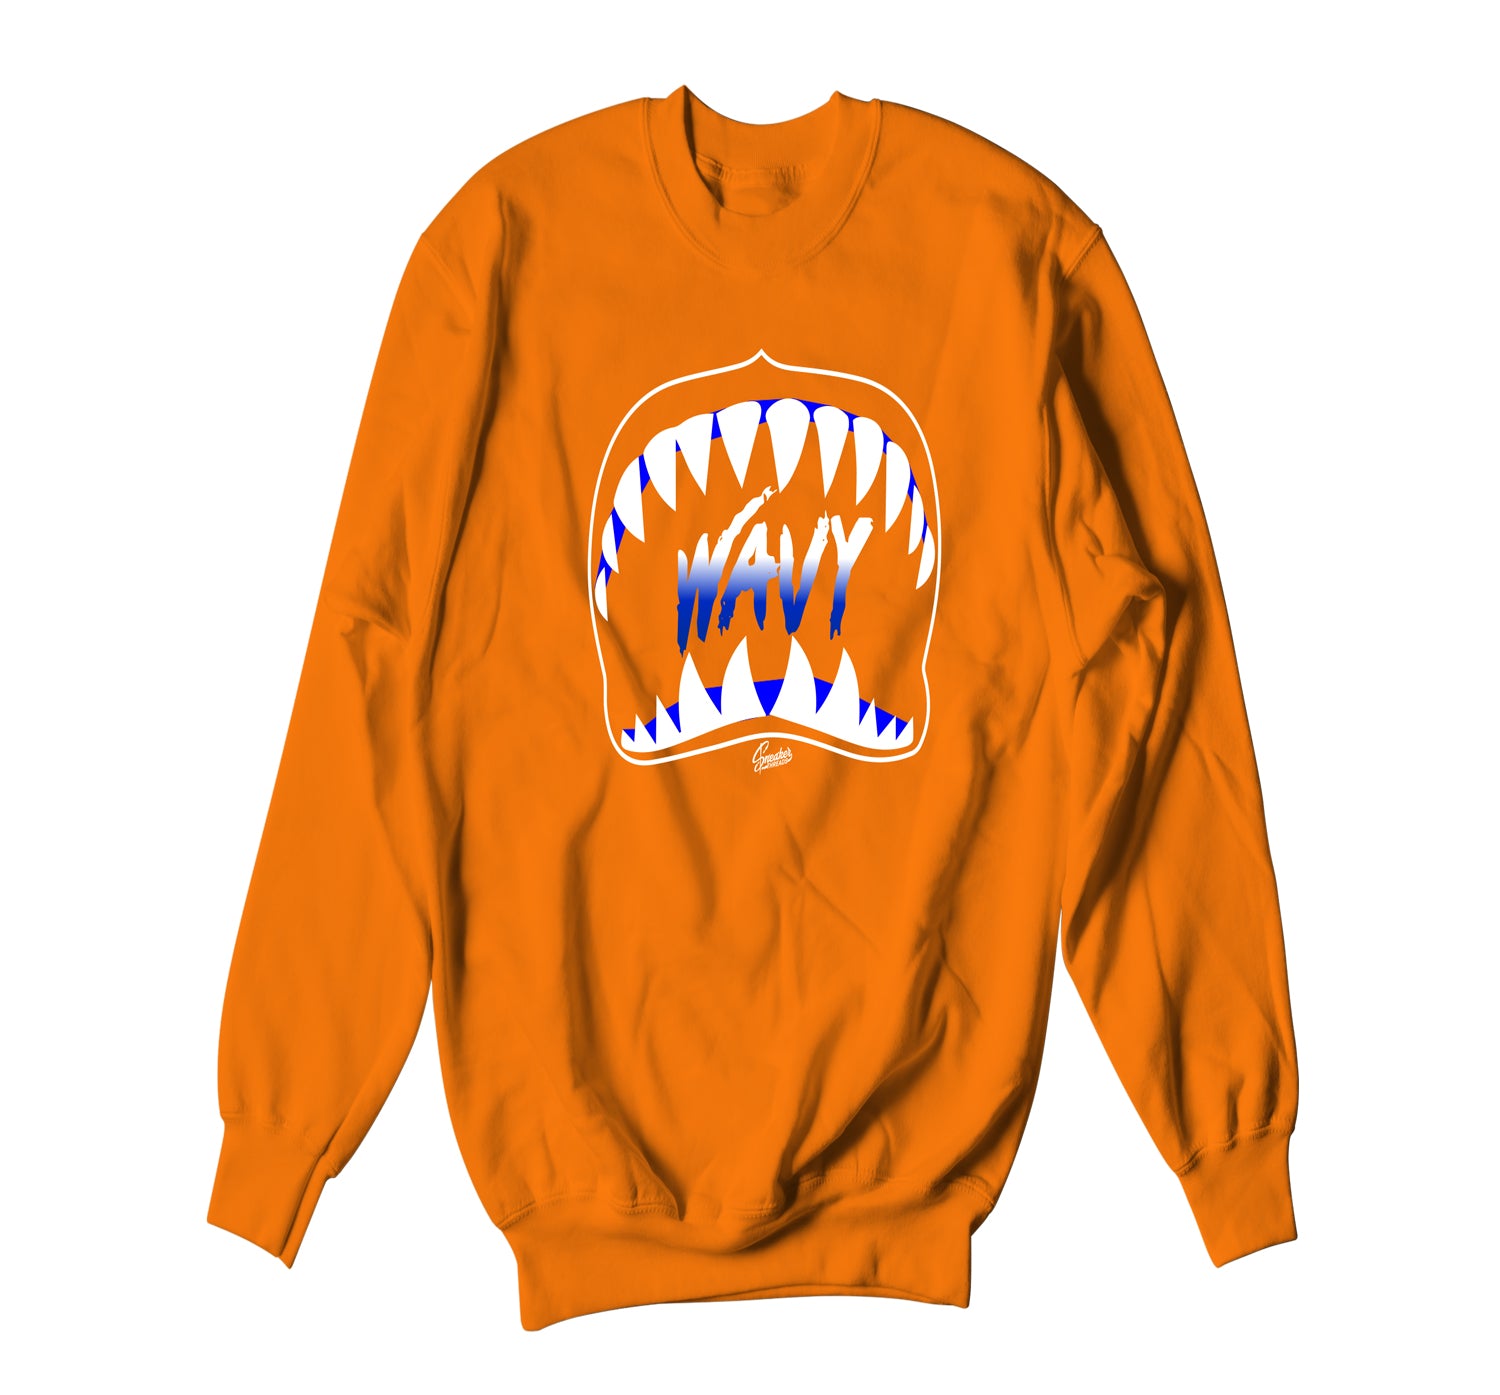 Retro 3 Knicks Sweater - Wavy - Orange